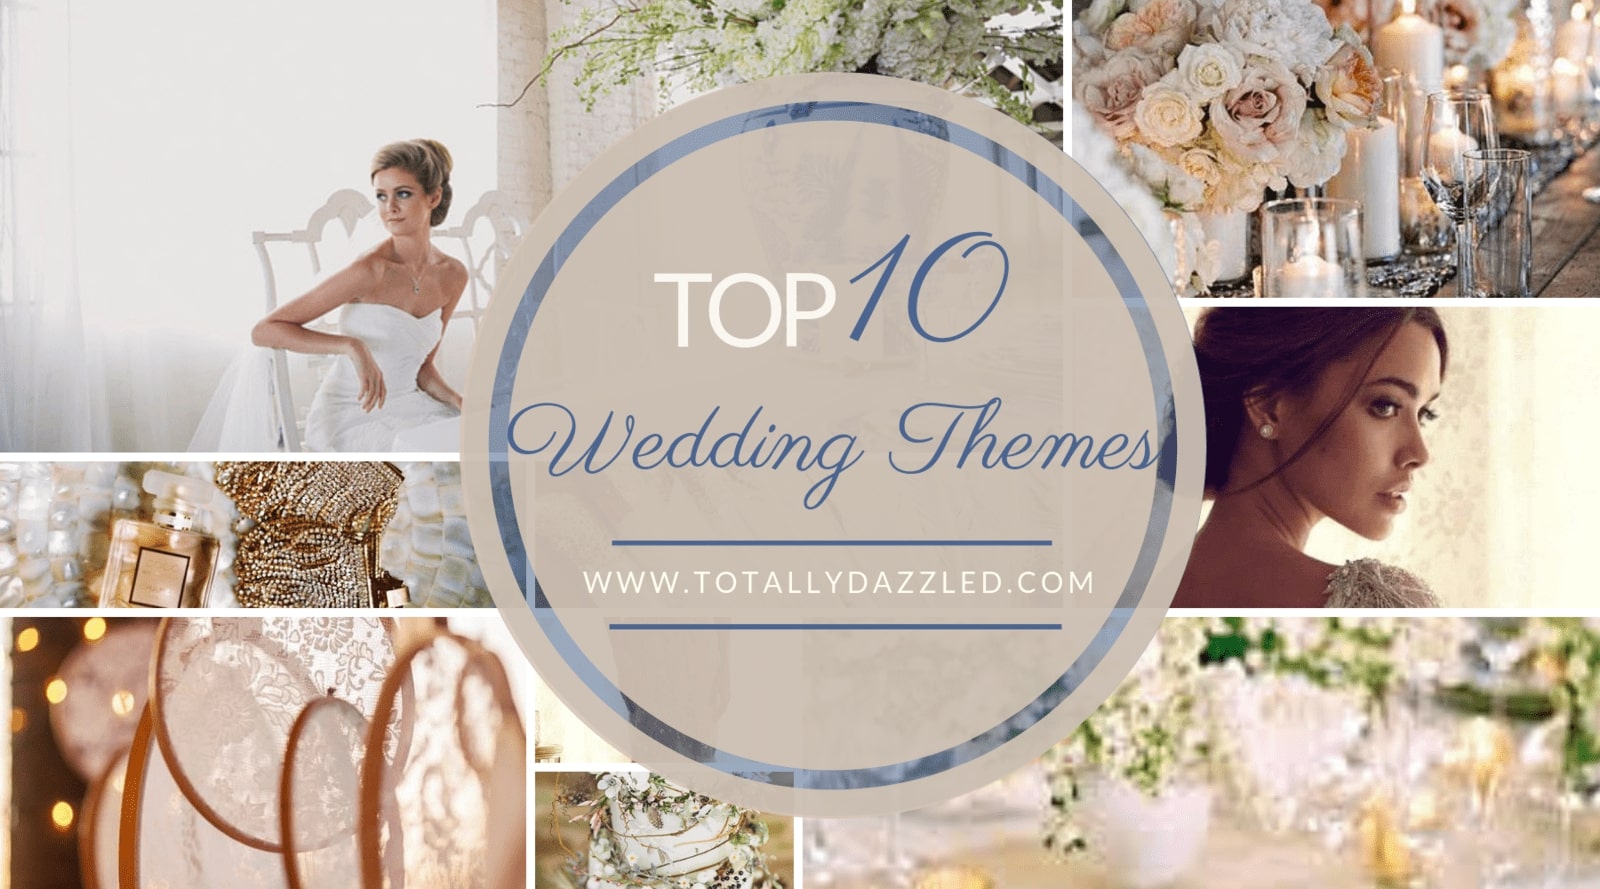 Top 10 Wedding Themes